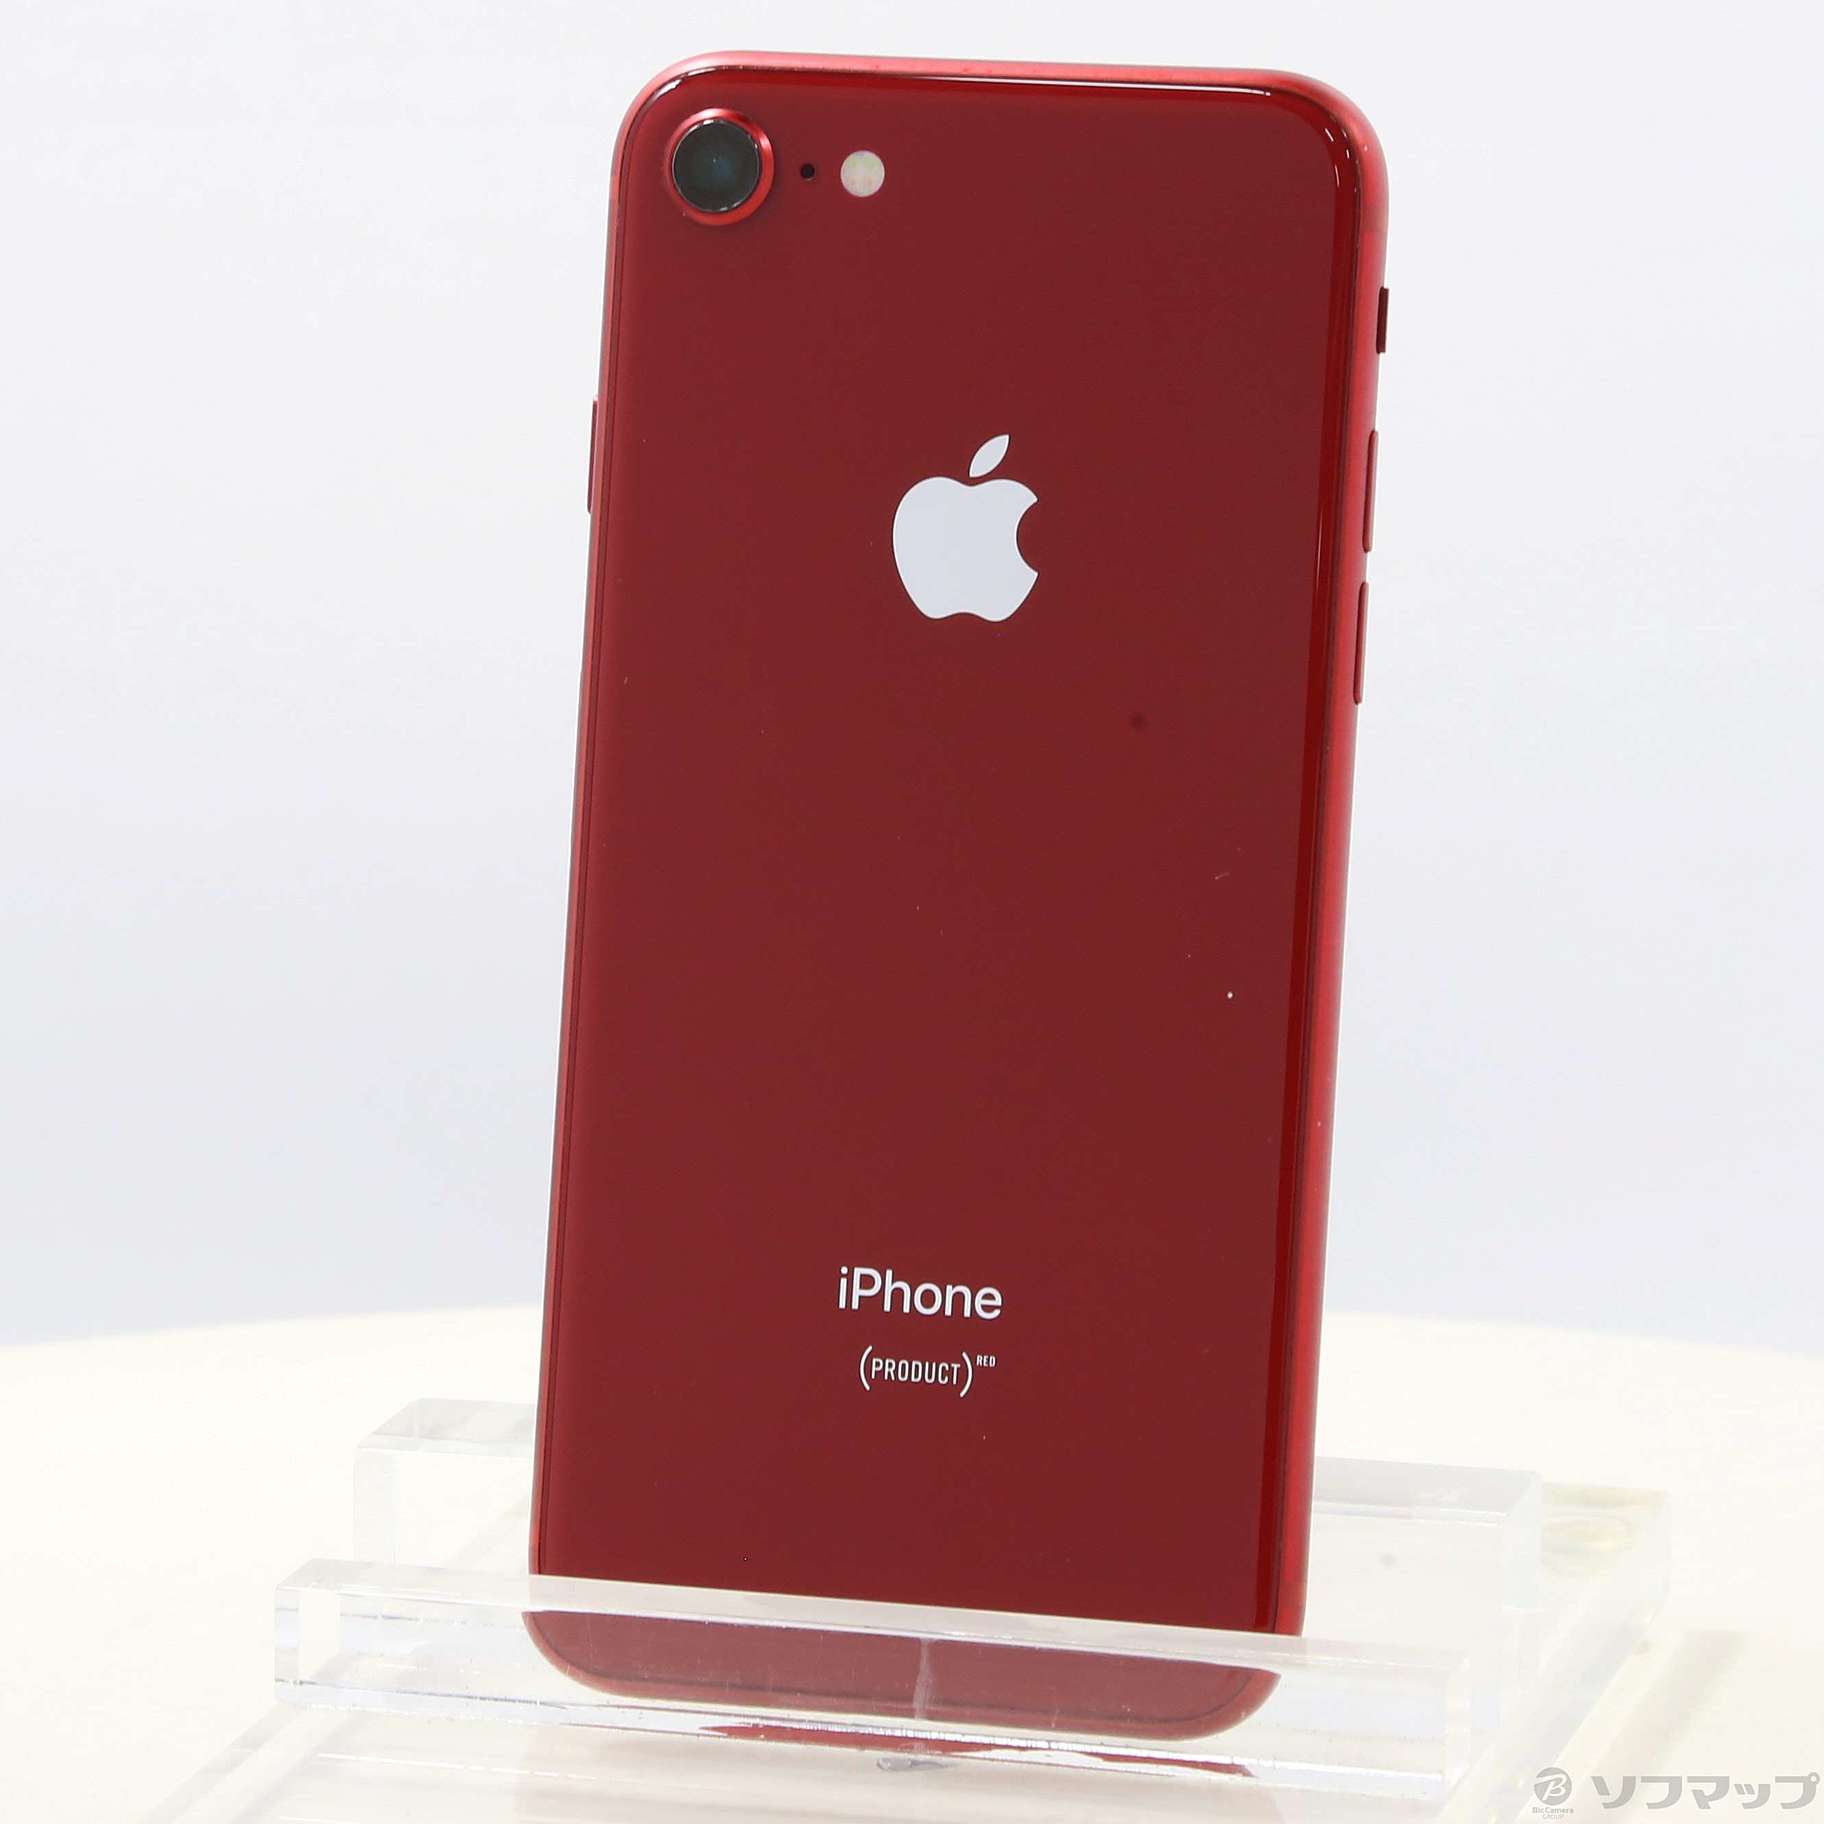 iPhone8 プロダクトレッド 64GB SIMフリー - スマートフォン本体